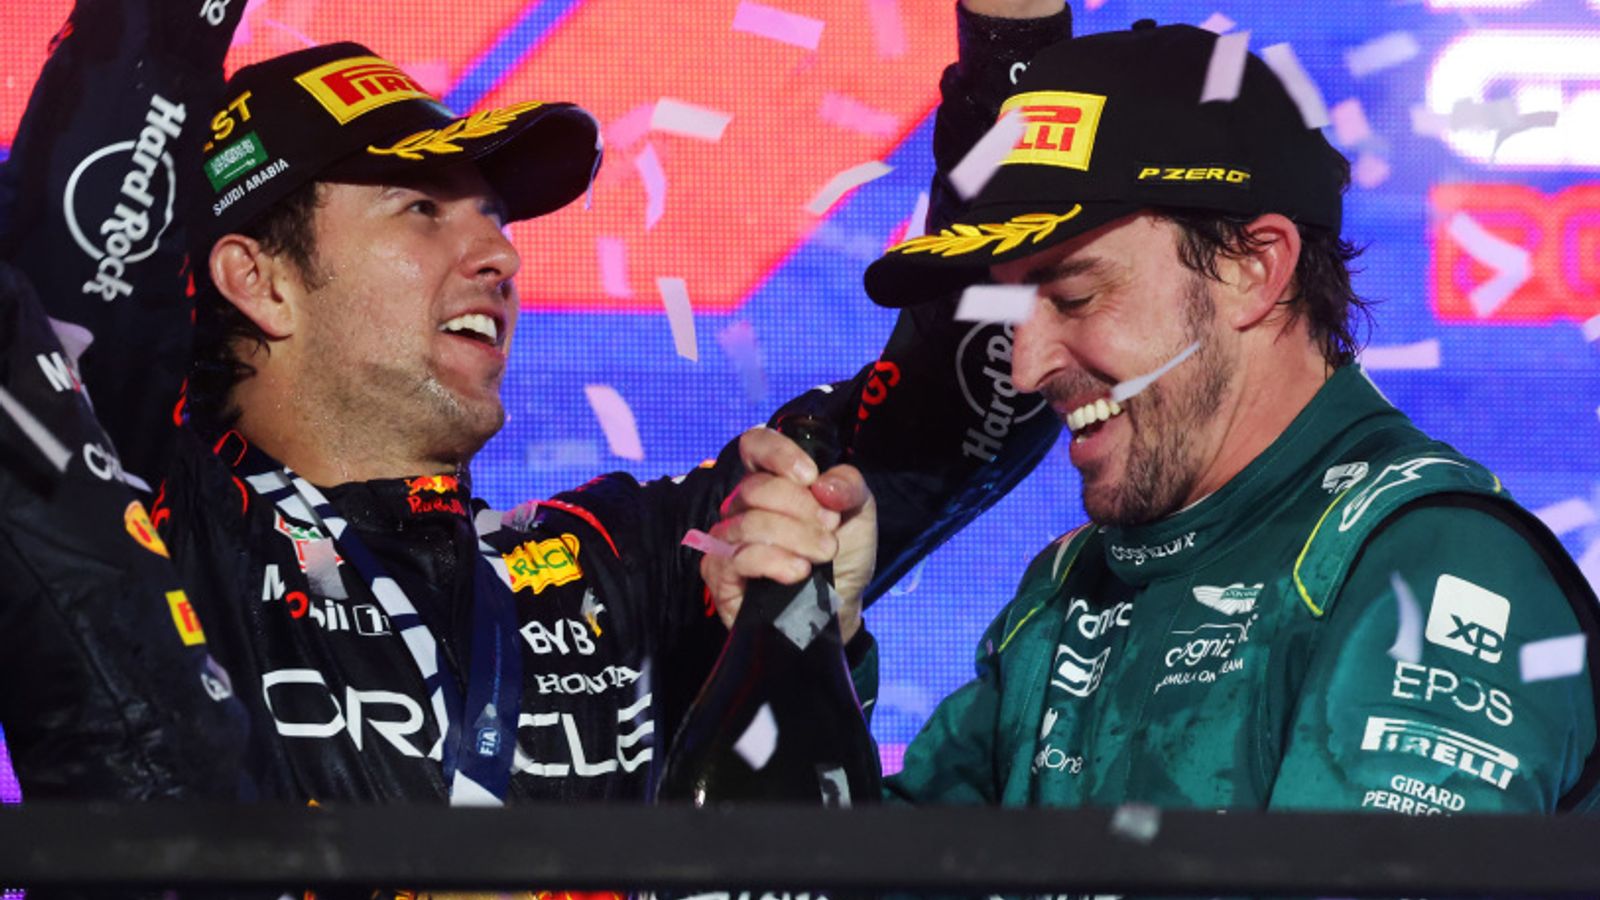 Martin Brundle on Saudi Arabian GP: Sergio Perez lands ‘significant’ blow on team-mate Max Verstappen